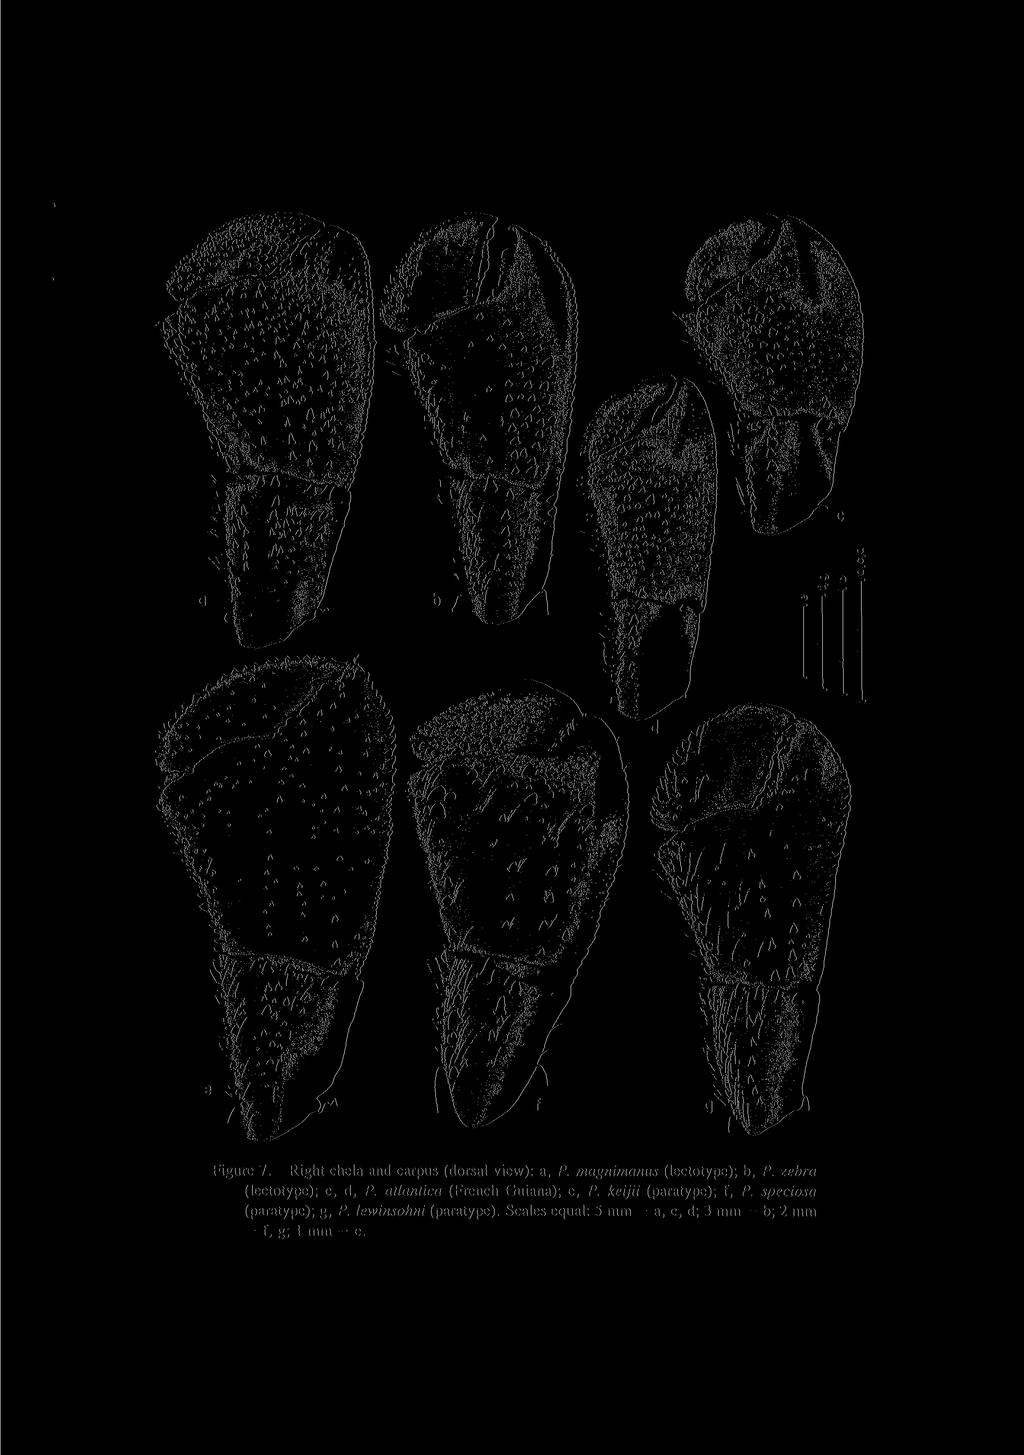 Figure 7. Right chela and carpus (dorsal view): a, P. magnimanus (lectotype); b, P. zebra (lectotype); c, d, P.